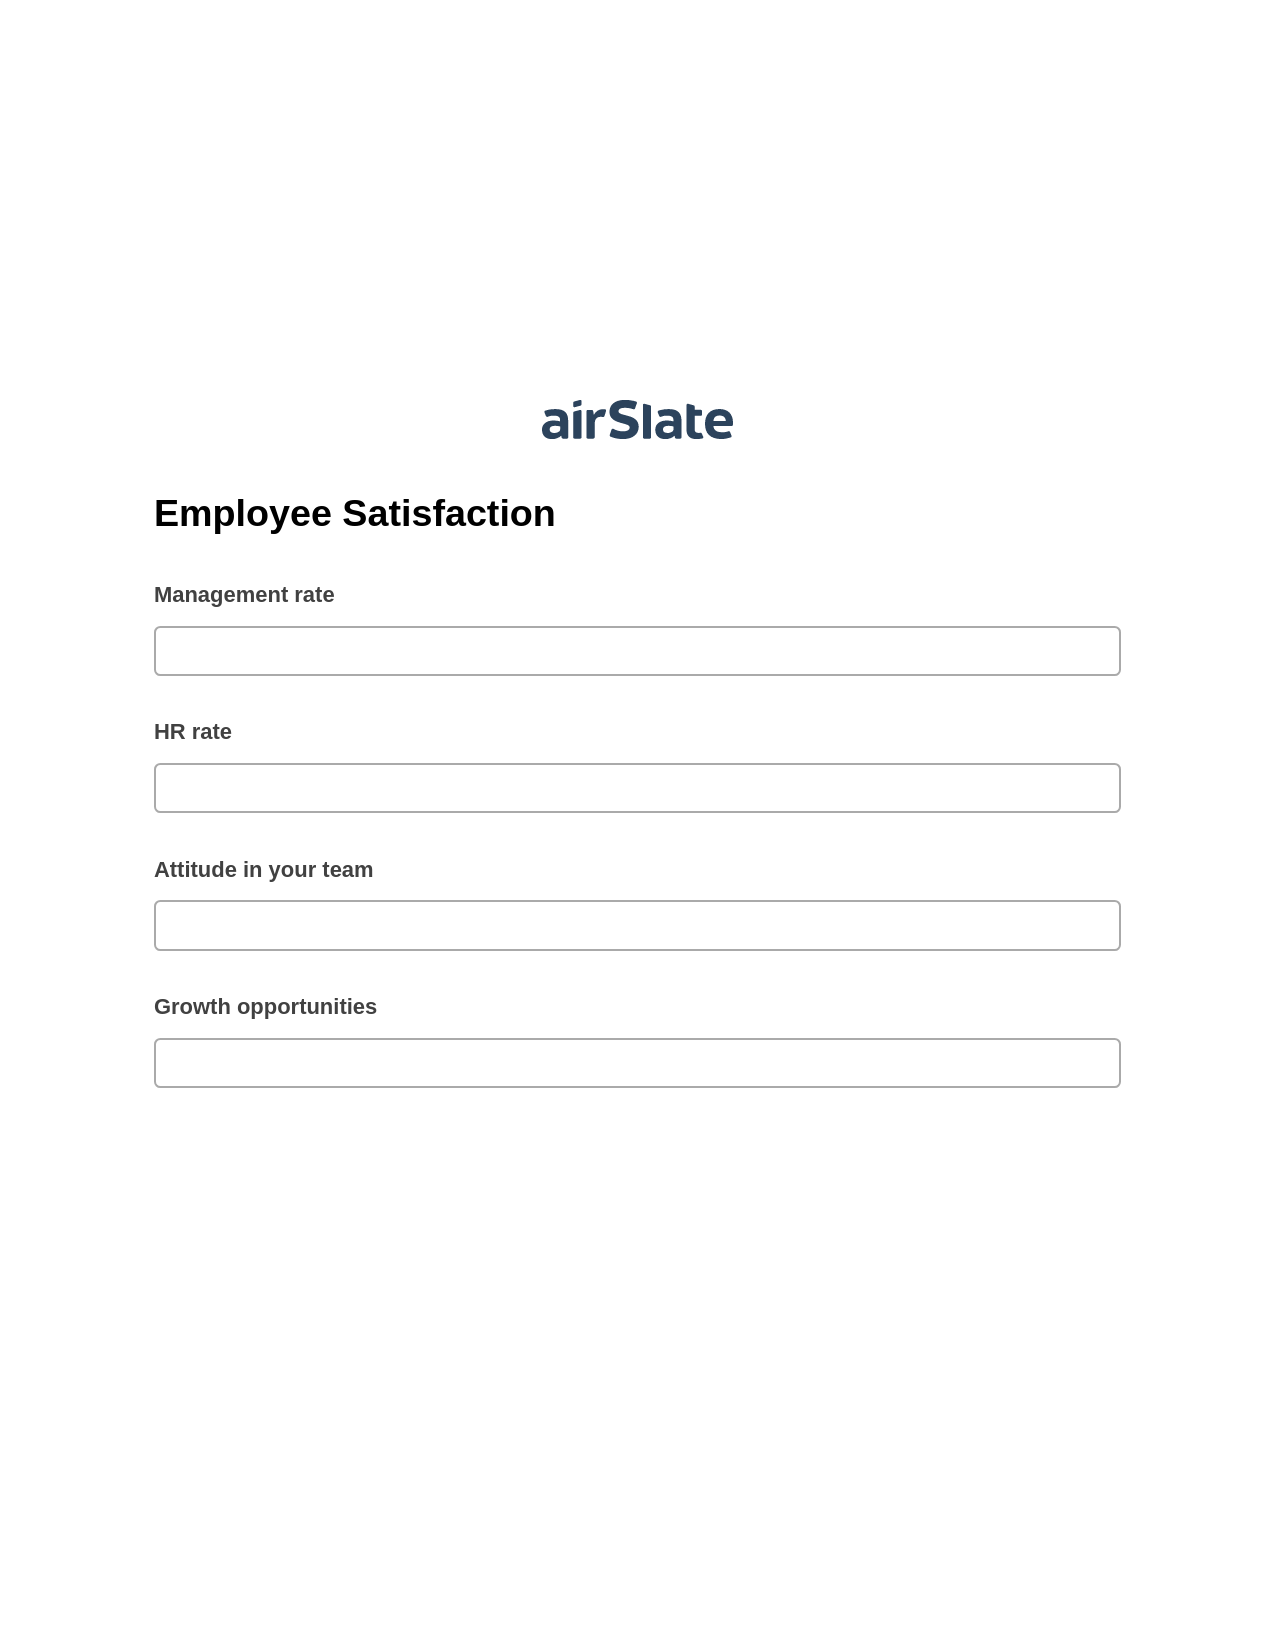 Multirole Employee Satisfaction Pre-fill from CSV File Bot, Update MS Dynamics 365 Records Bot, Slack Two-Way Binding Bot